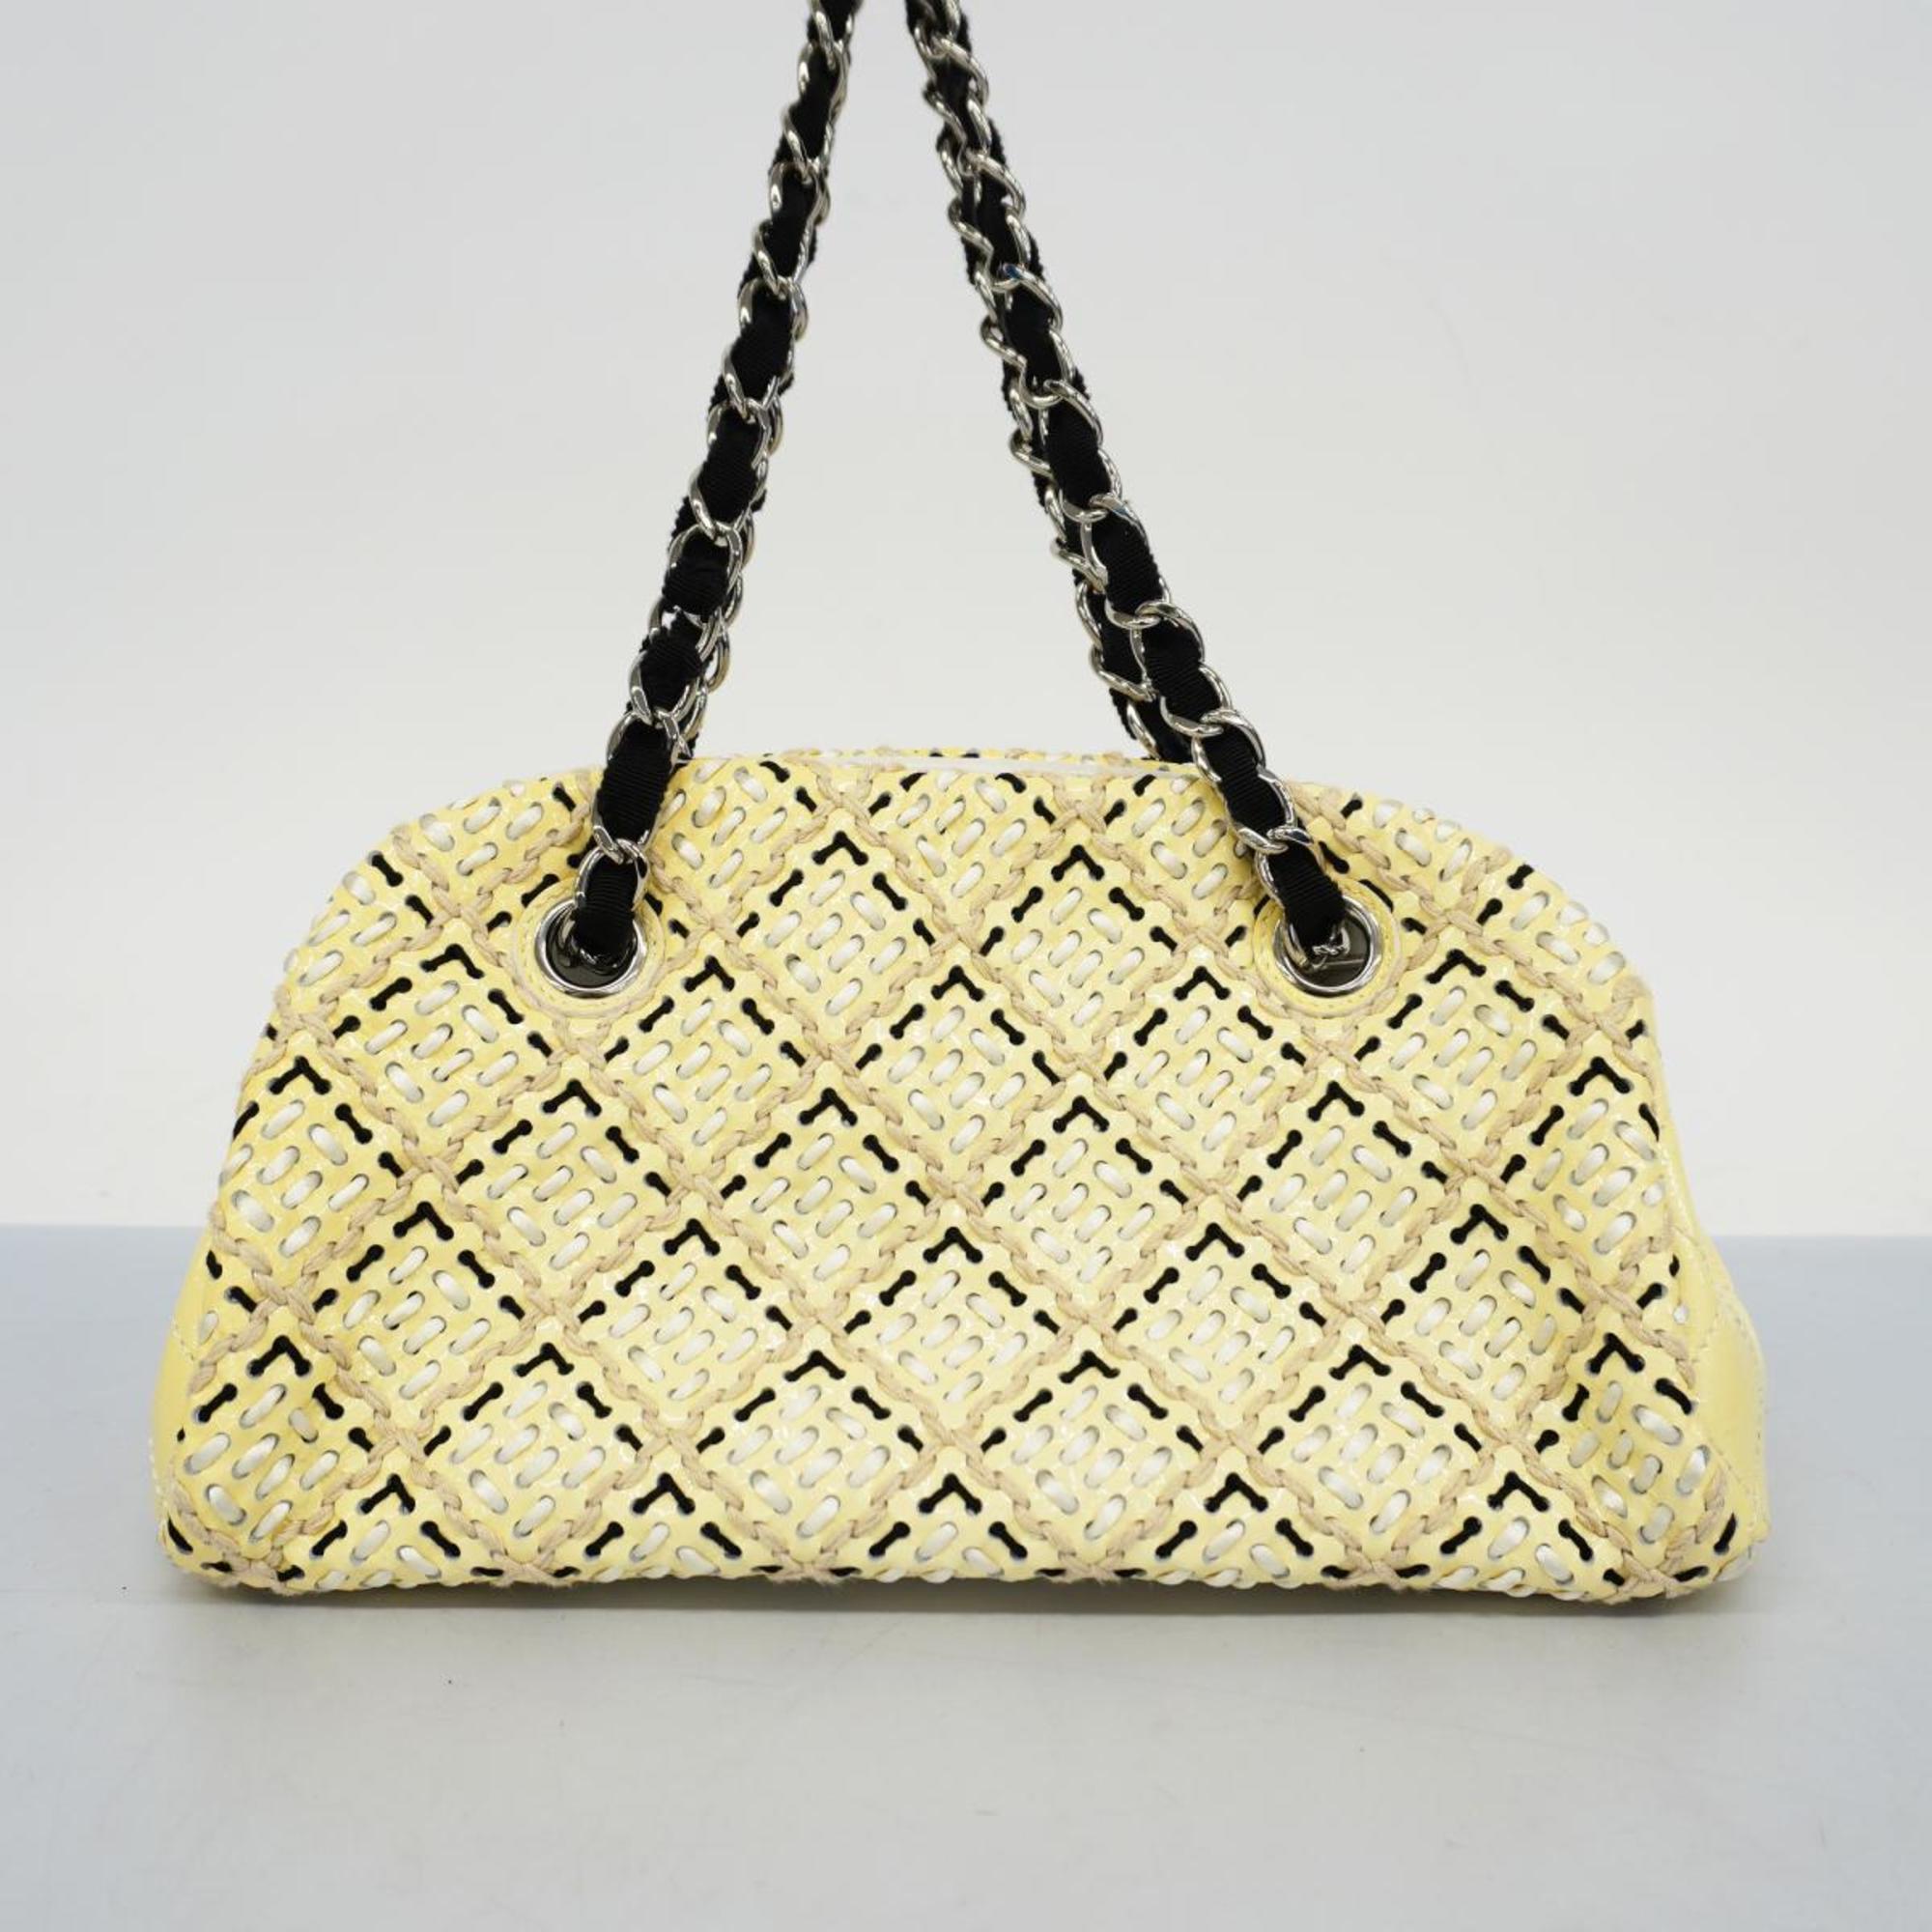 Chanel handbag patent leather black white cream yellow ladies